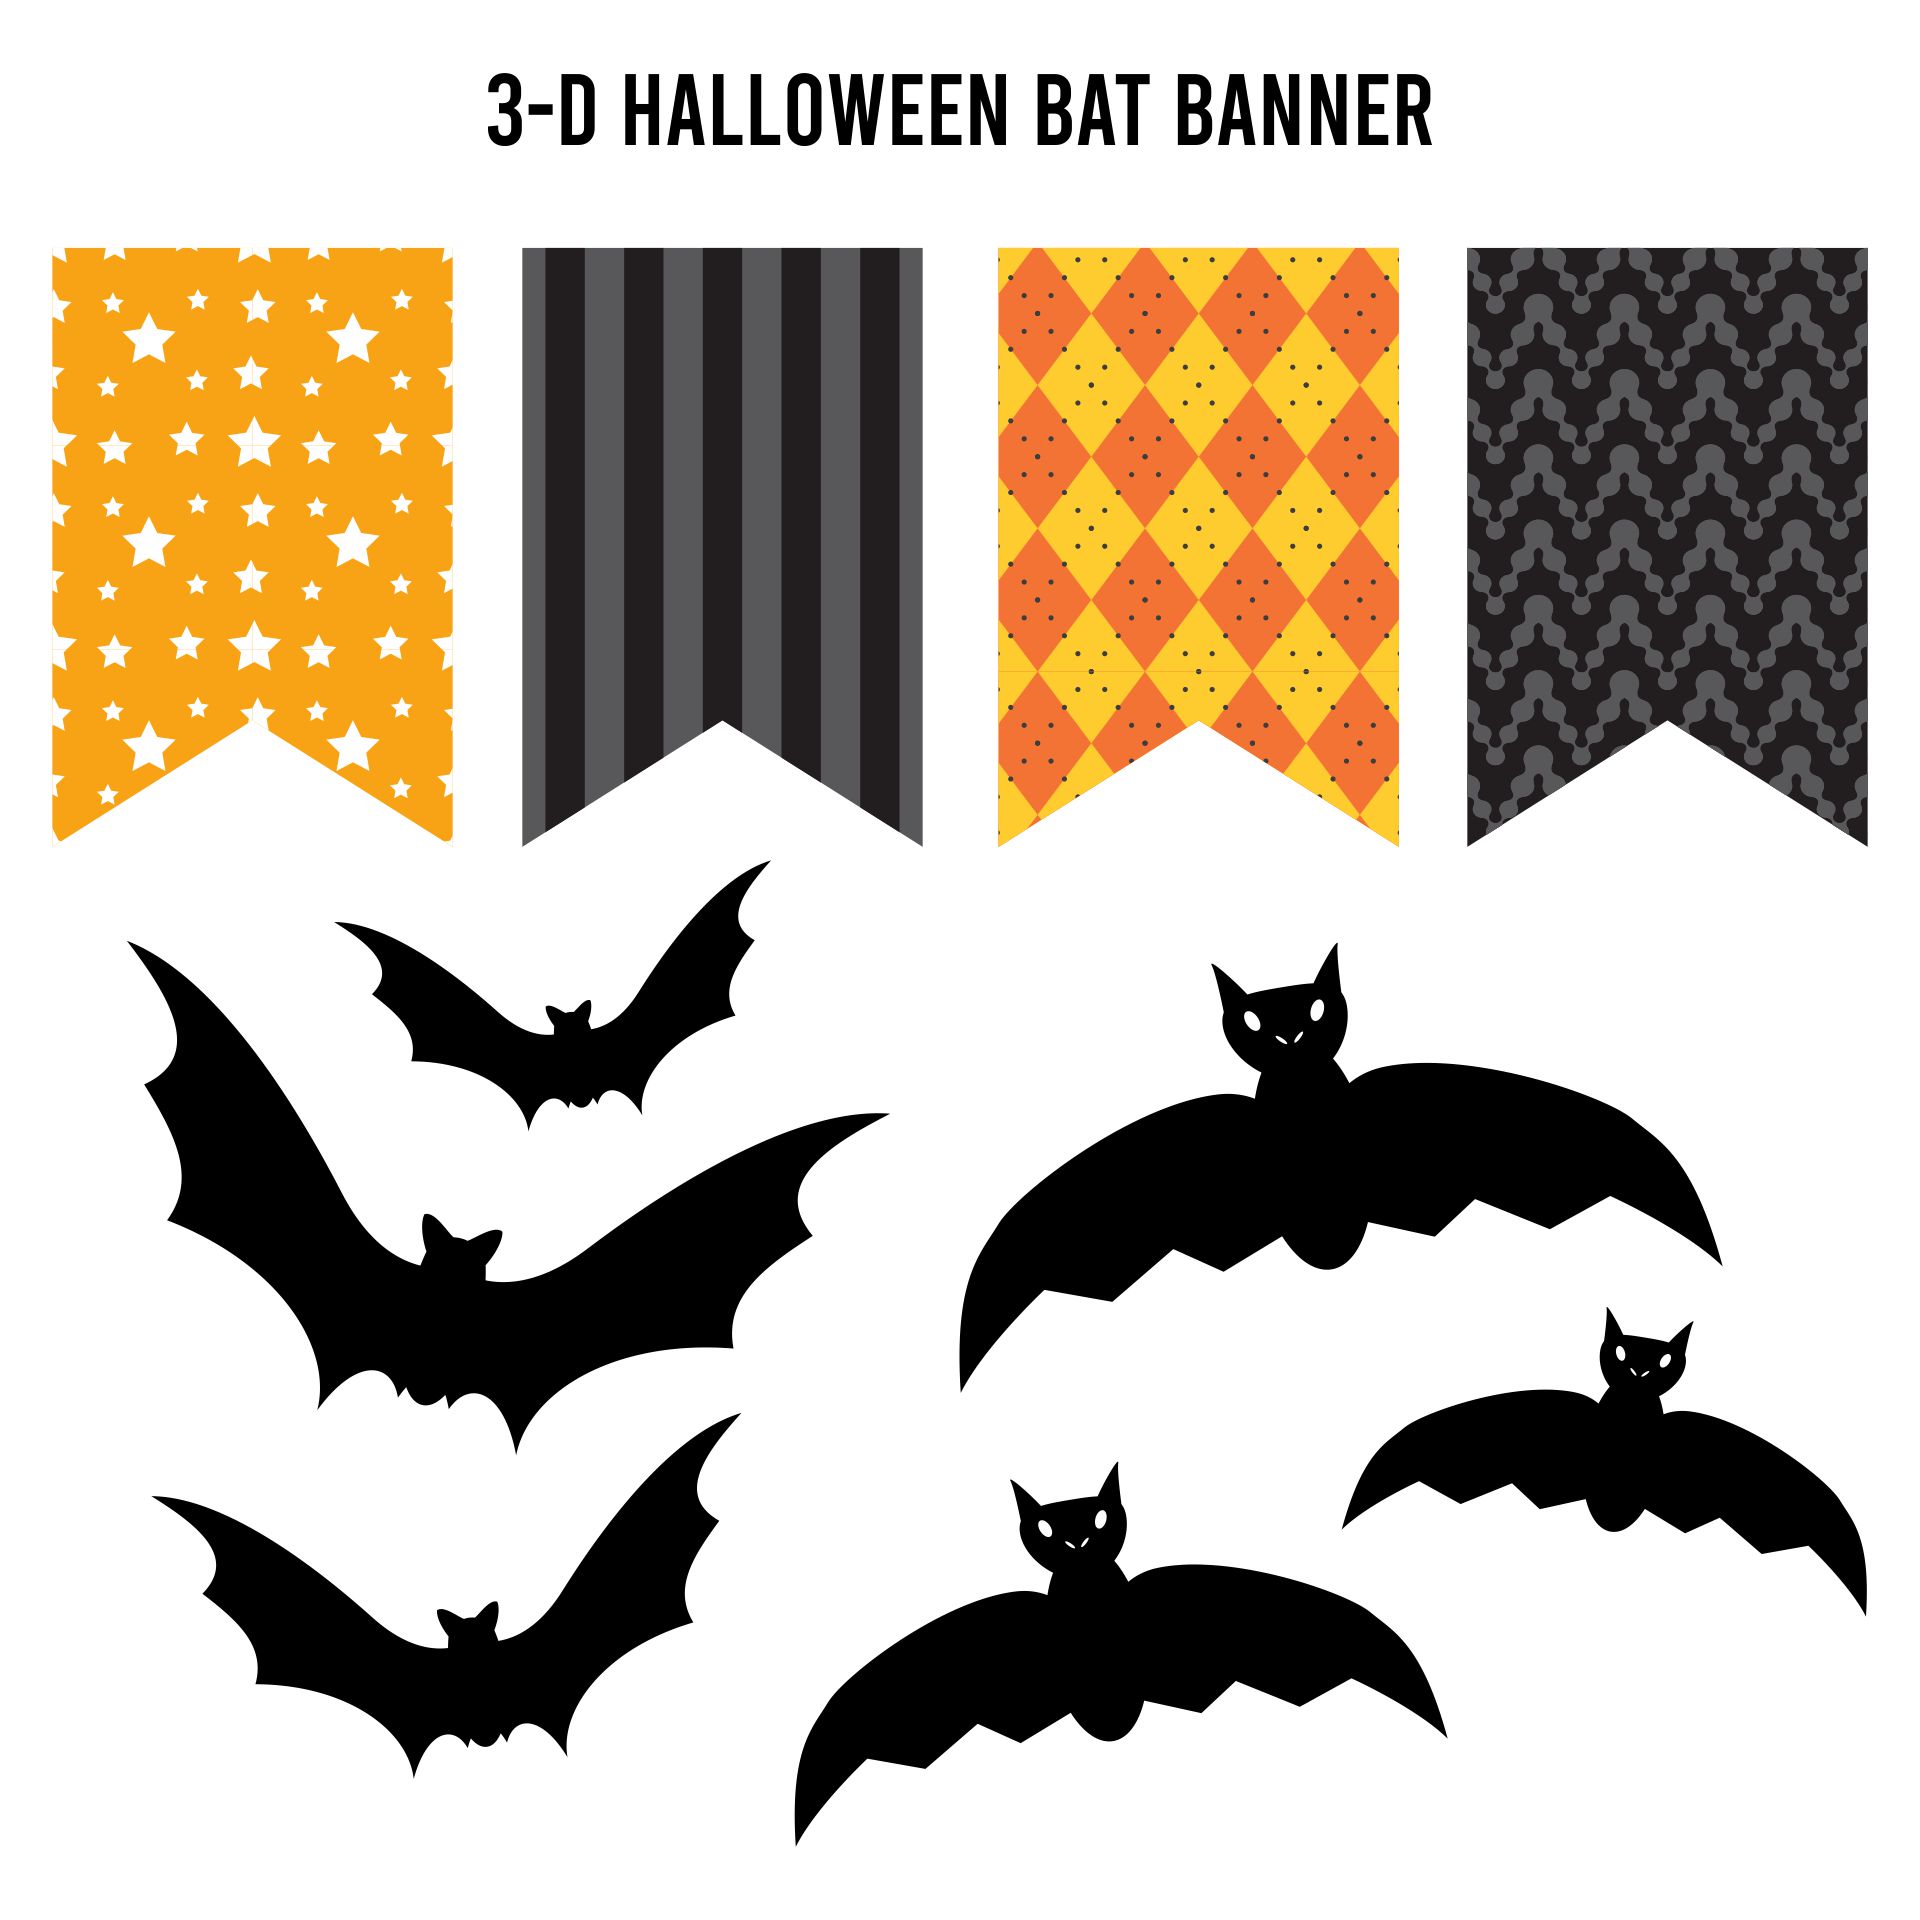 Printable 3-D Halloween Bat Banner Template